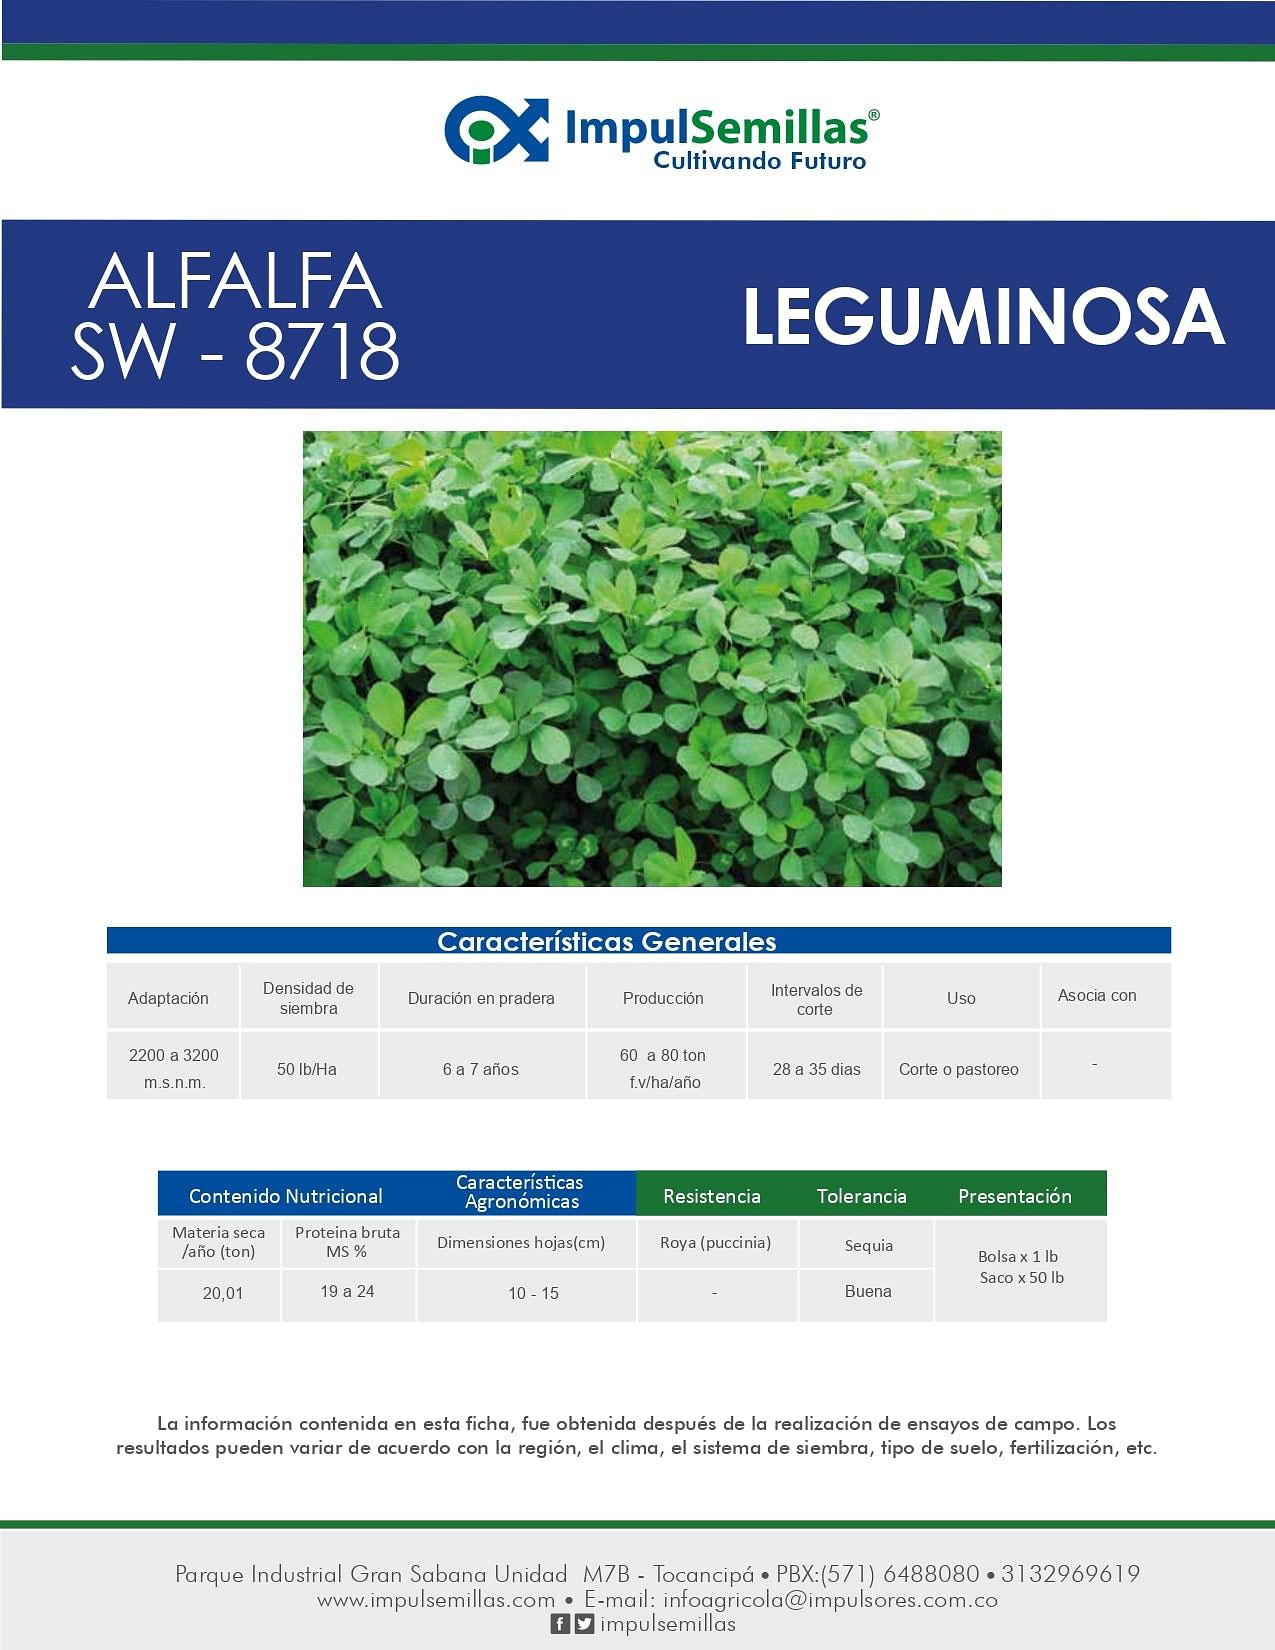 Alfalfa SW - 8718 x 454 gramos